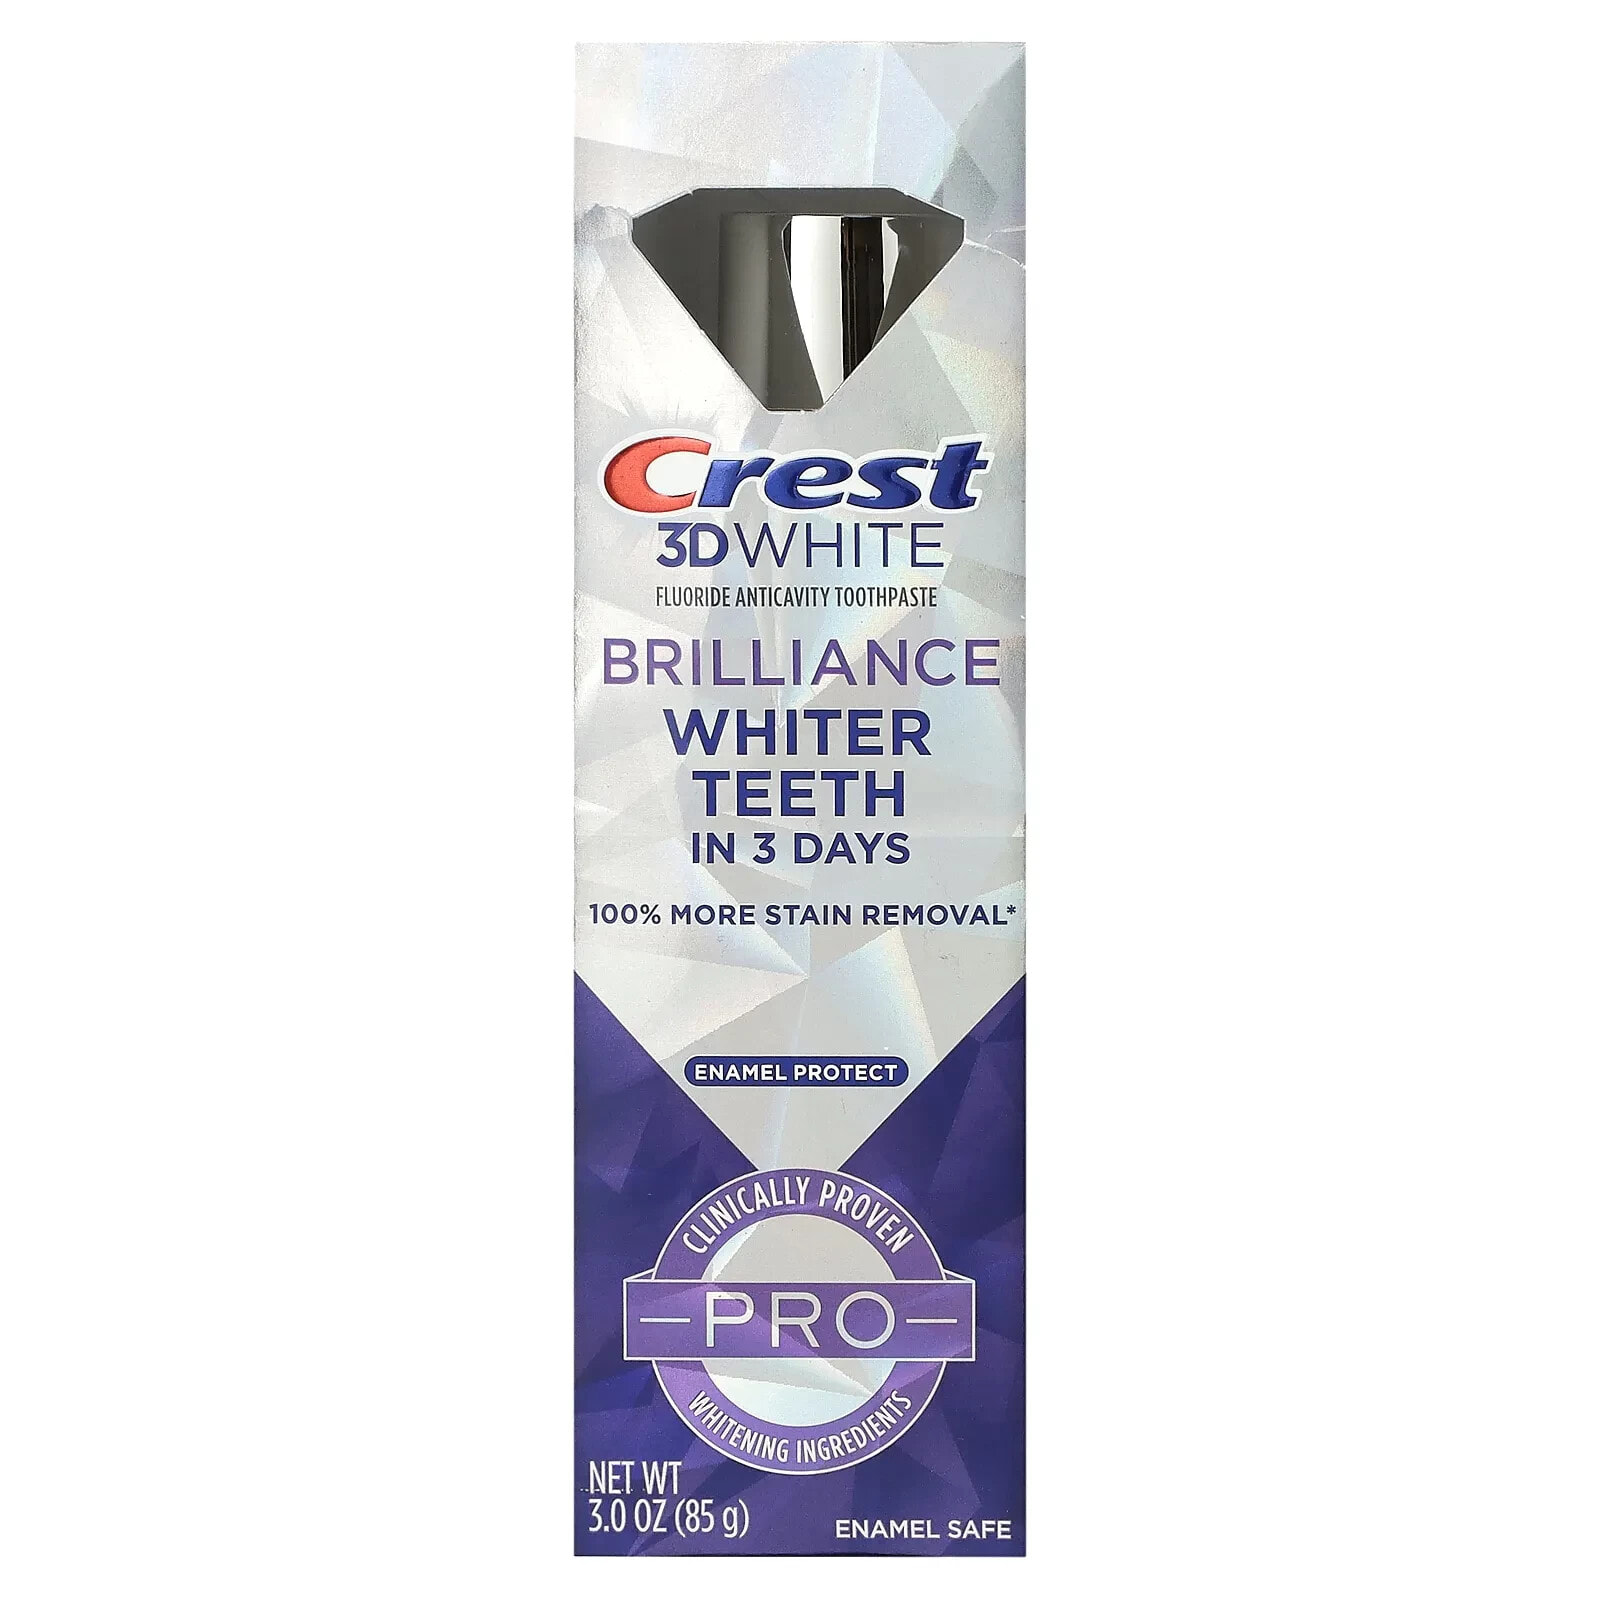 Фтор защита. Зубная паста Crest 3d White Brilliance 2 Step. Crest 3d White Brilliance Boost.